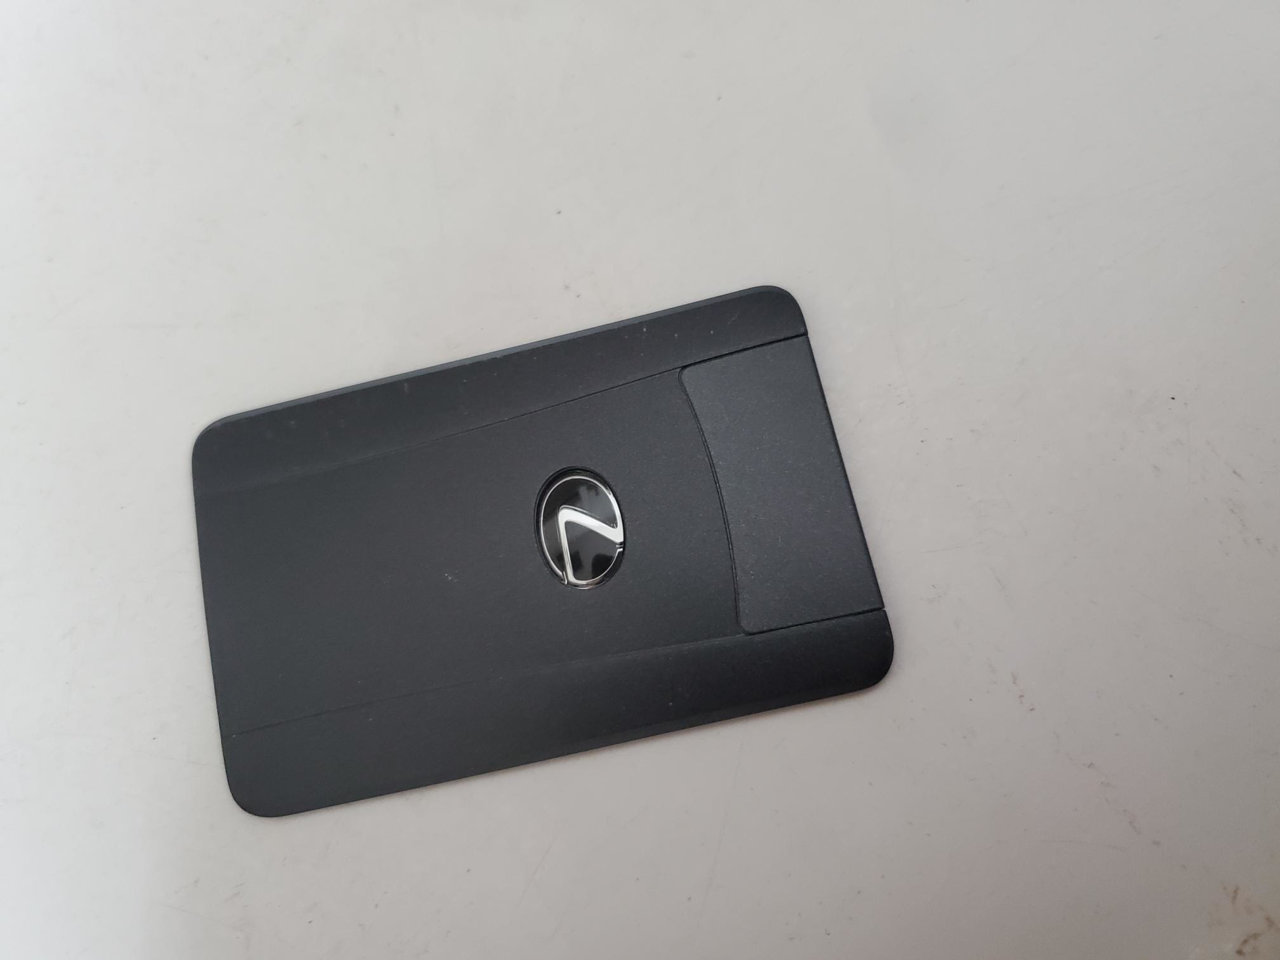 tacoma credit card key.jpg